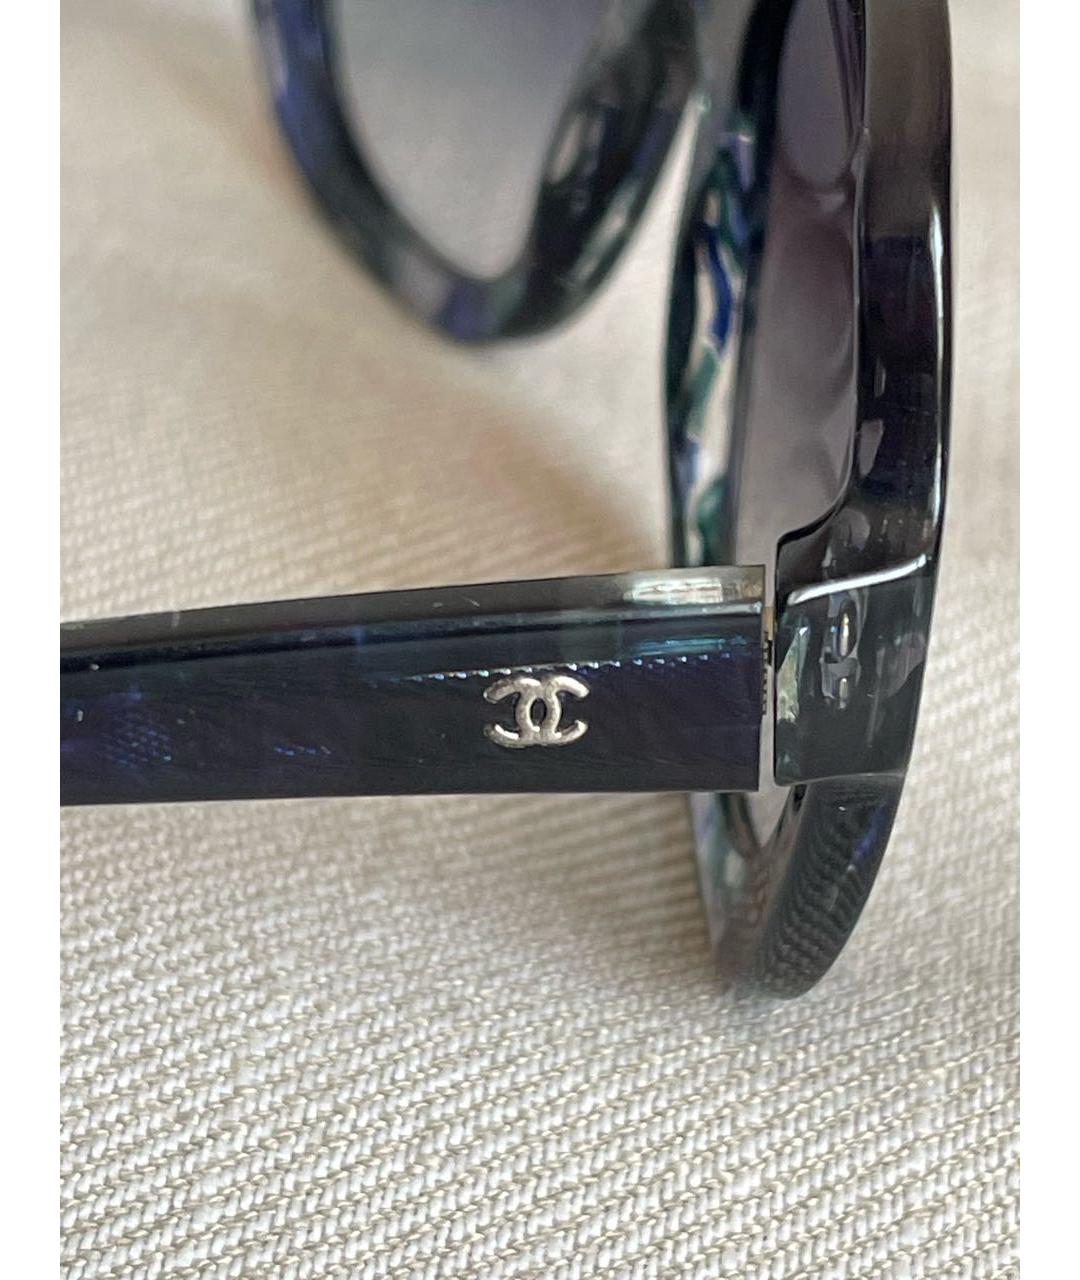 CHANEL PRE-OWNED Темно-синие пластиковые солнцезащитные очки, фото 3